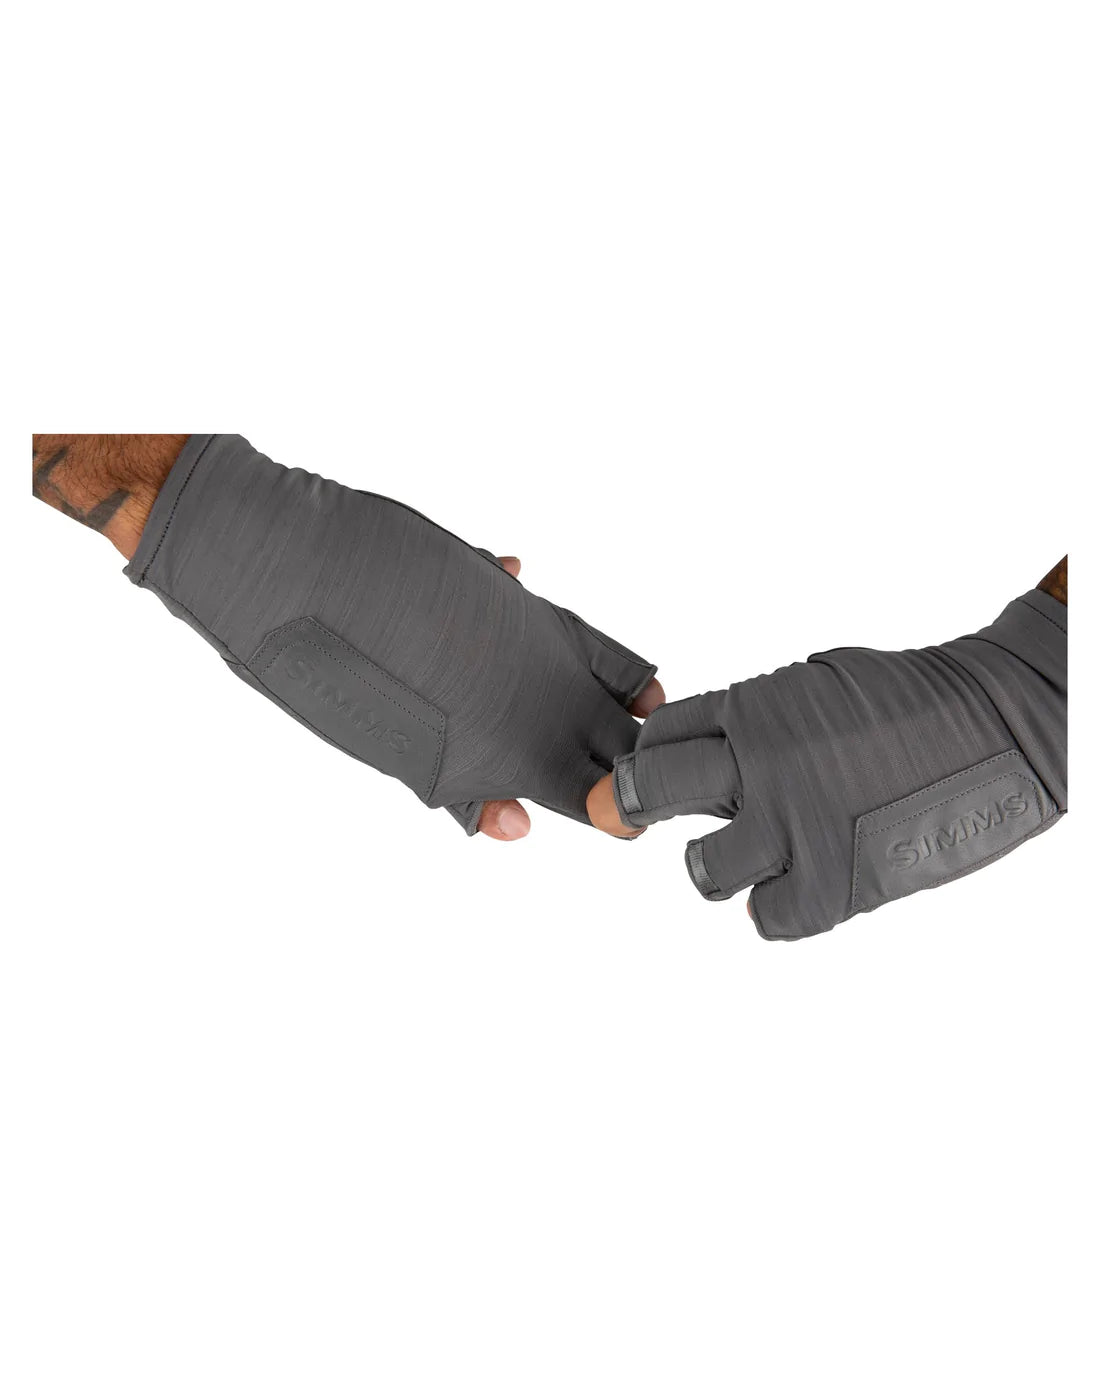 Simms Solarflex Guide Glove Sterling